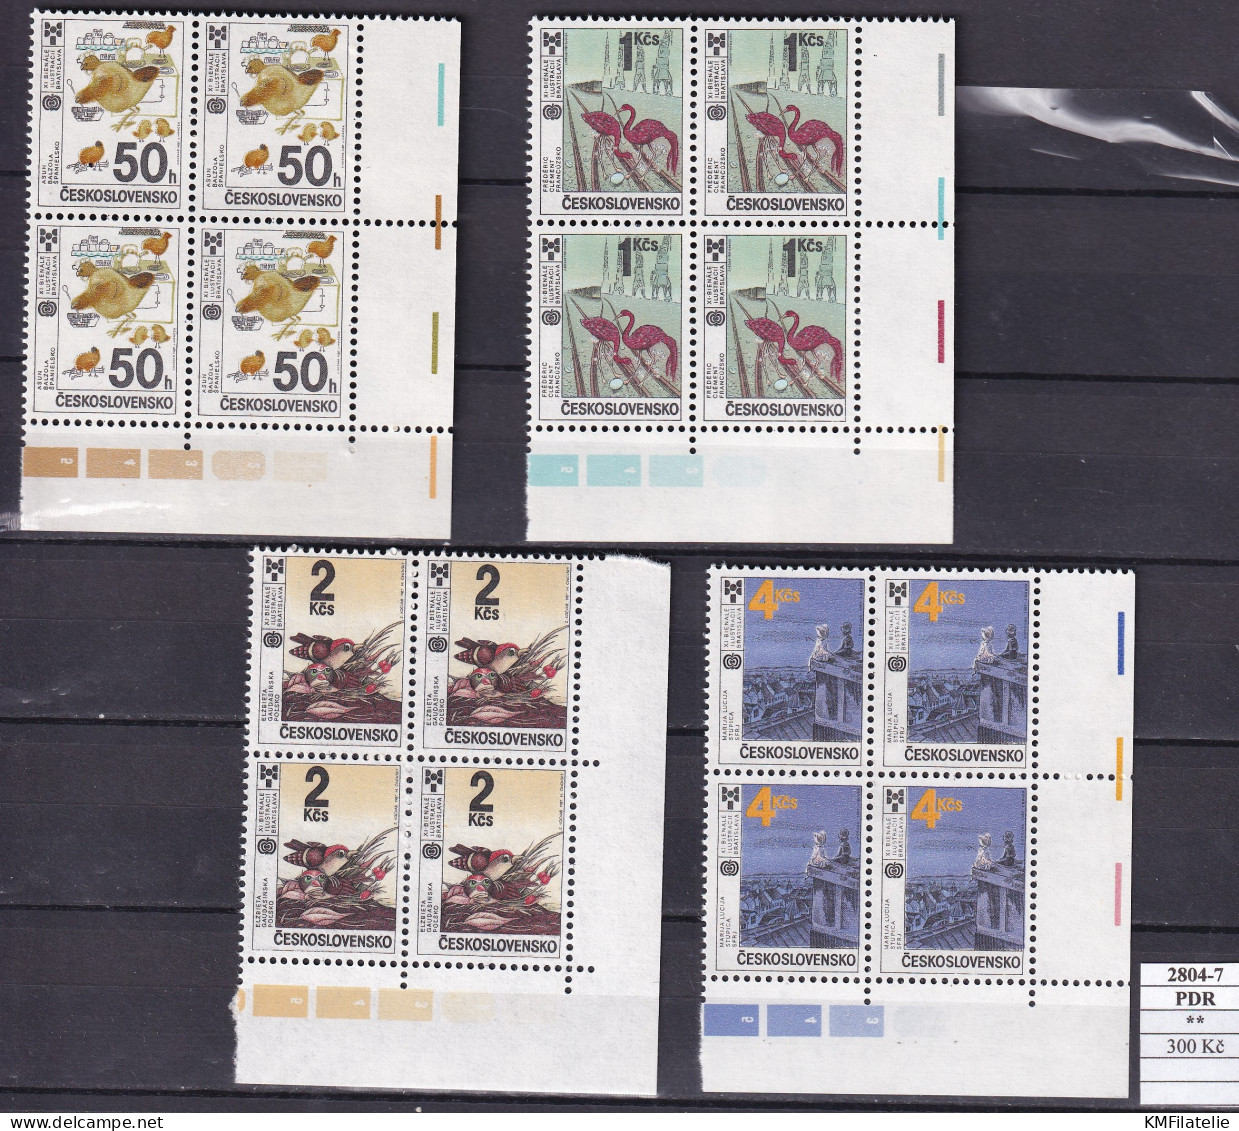 Czechoslovakia Pofis 2804-7 PDR MNH - Unused Stamps